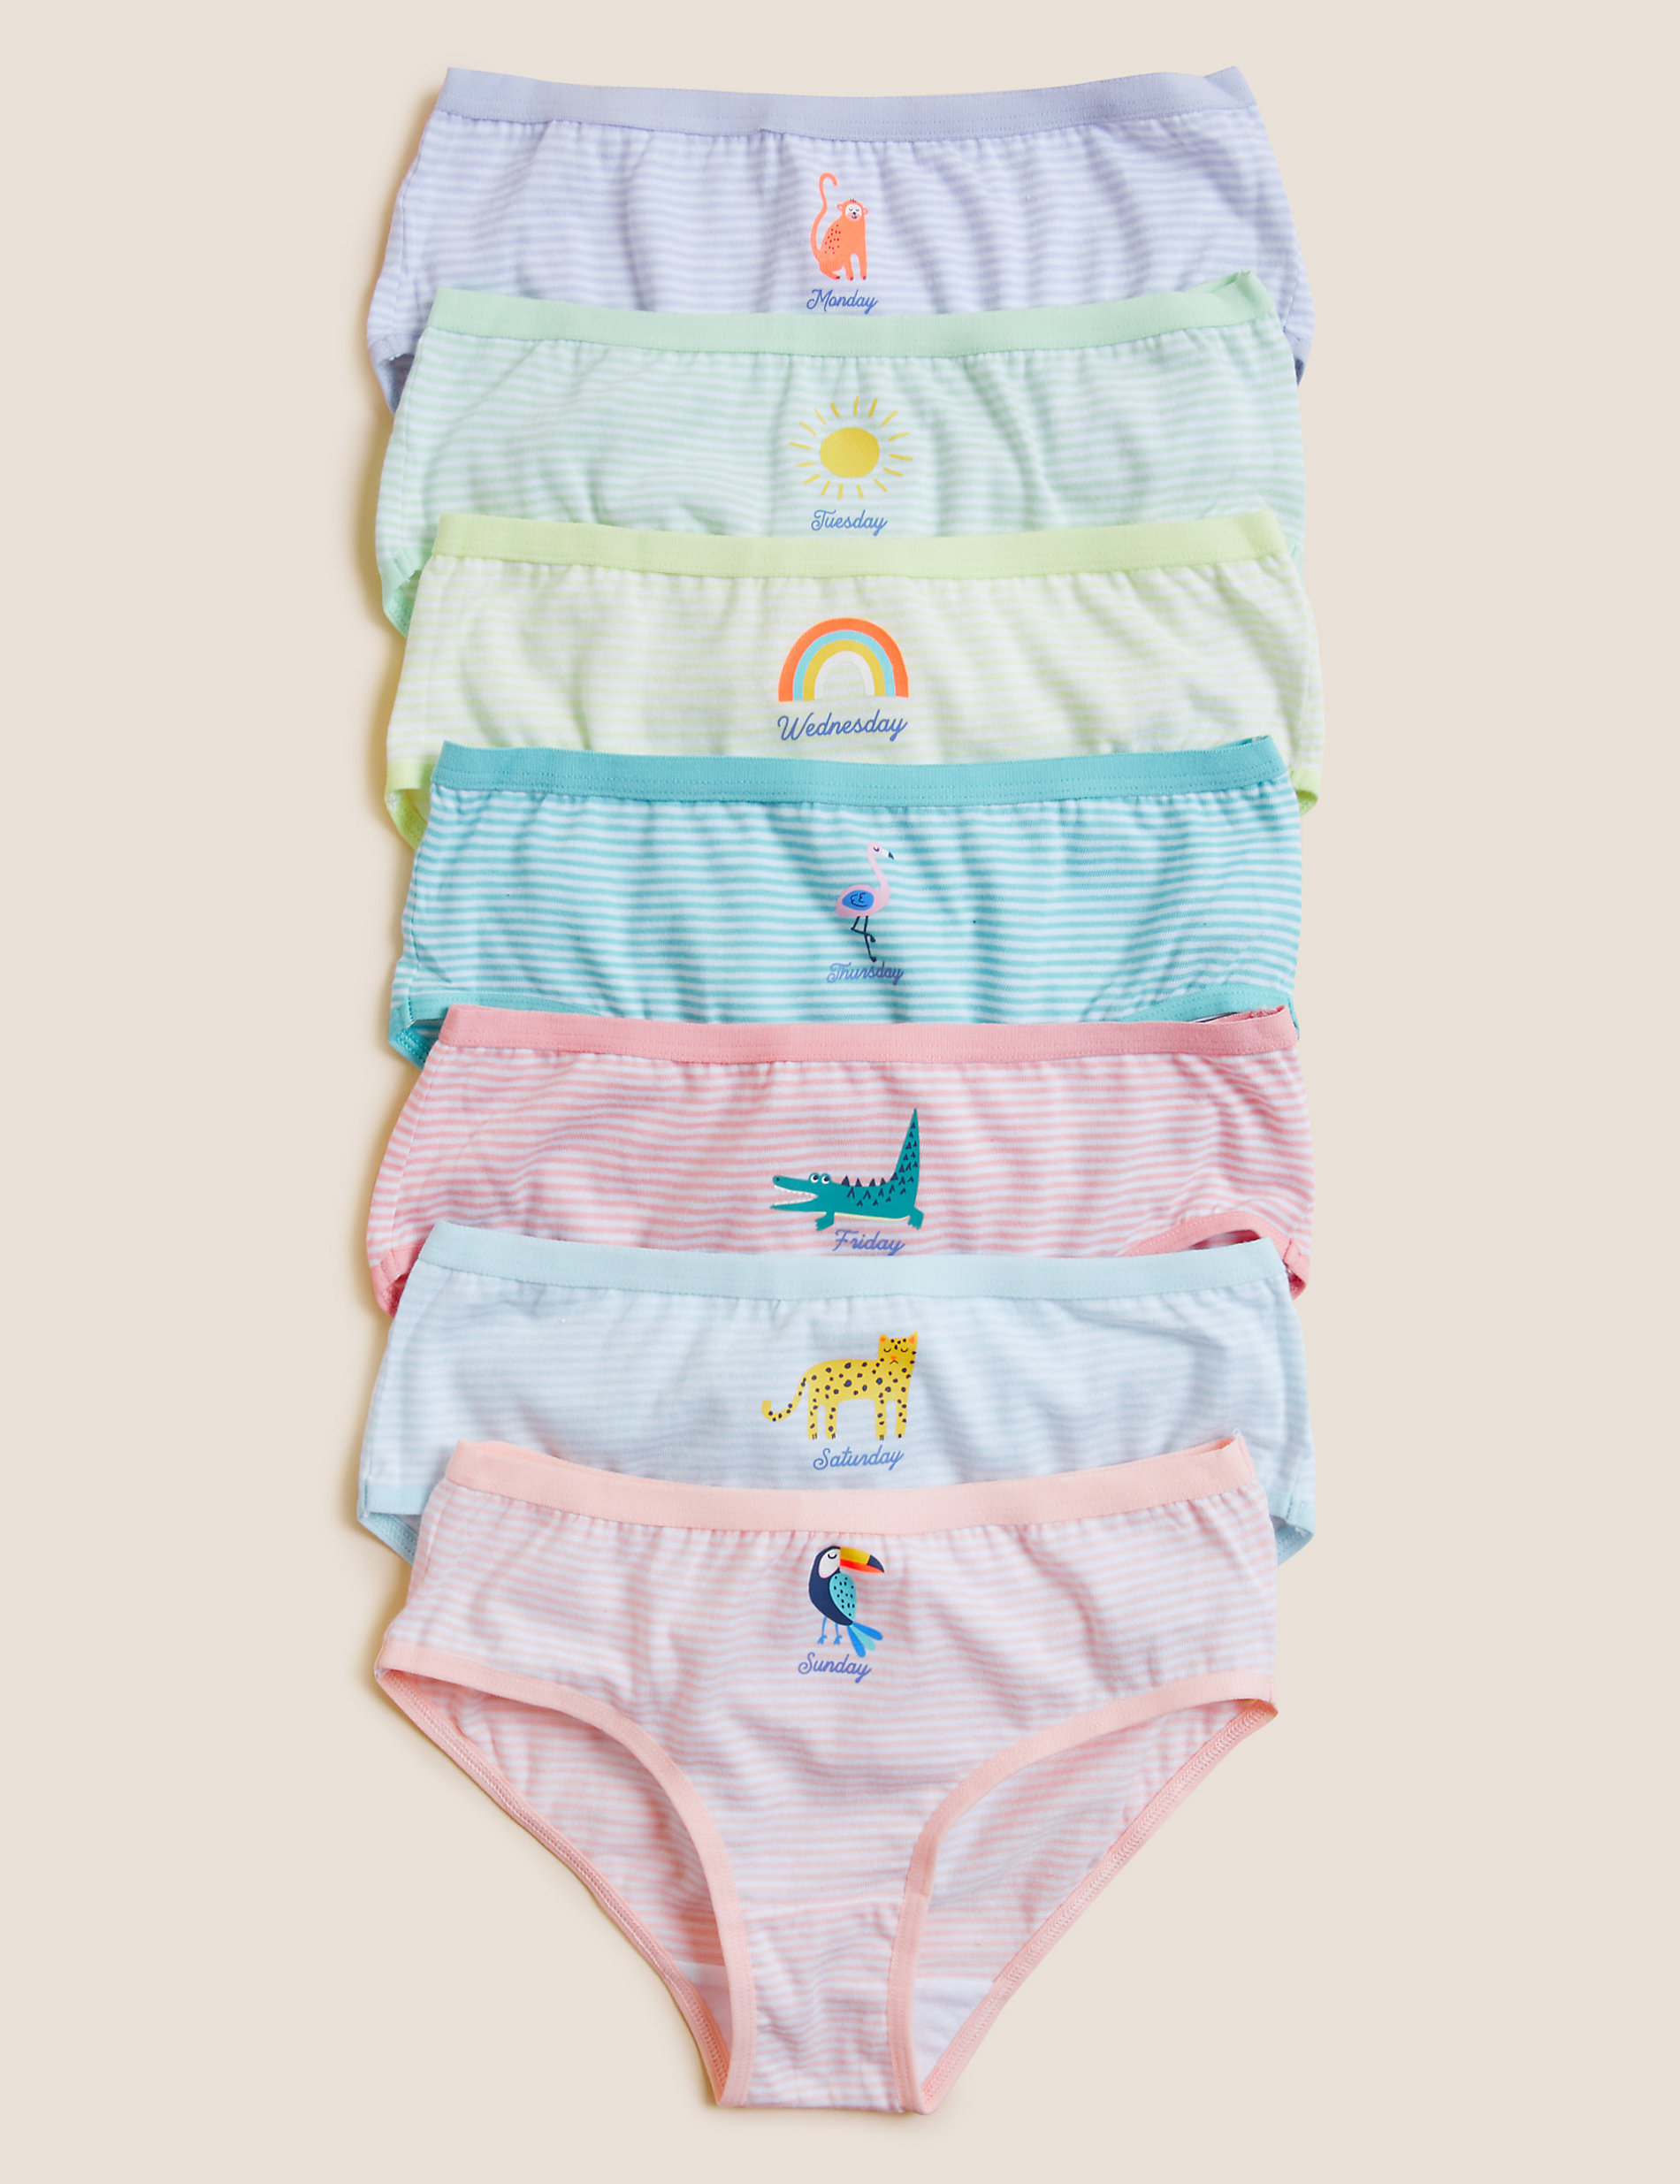 Pack of 6 sundy Baby Soft Cotton Panties Cotton Little Girls Underwear Toddler 100% Cotton Briefs for Girls 